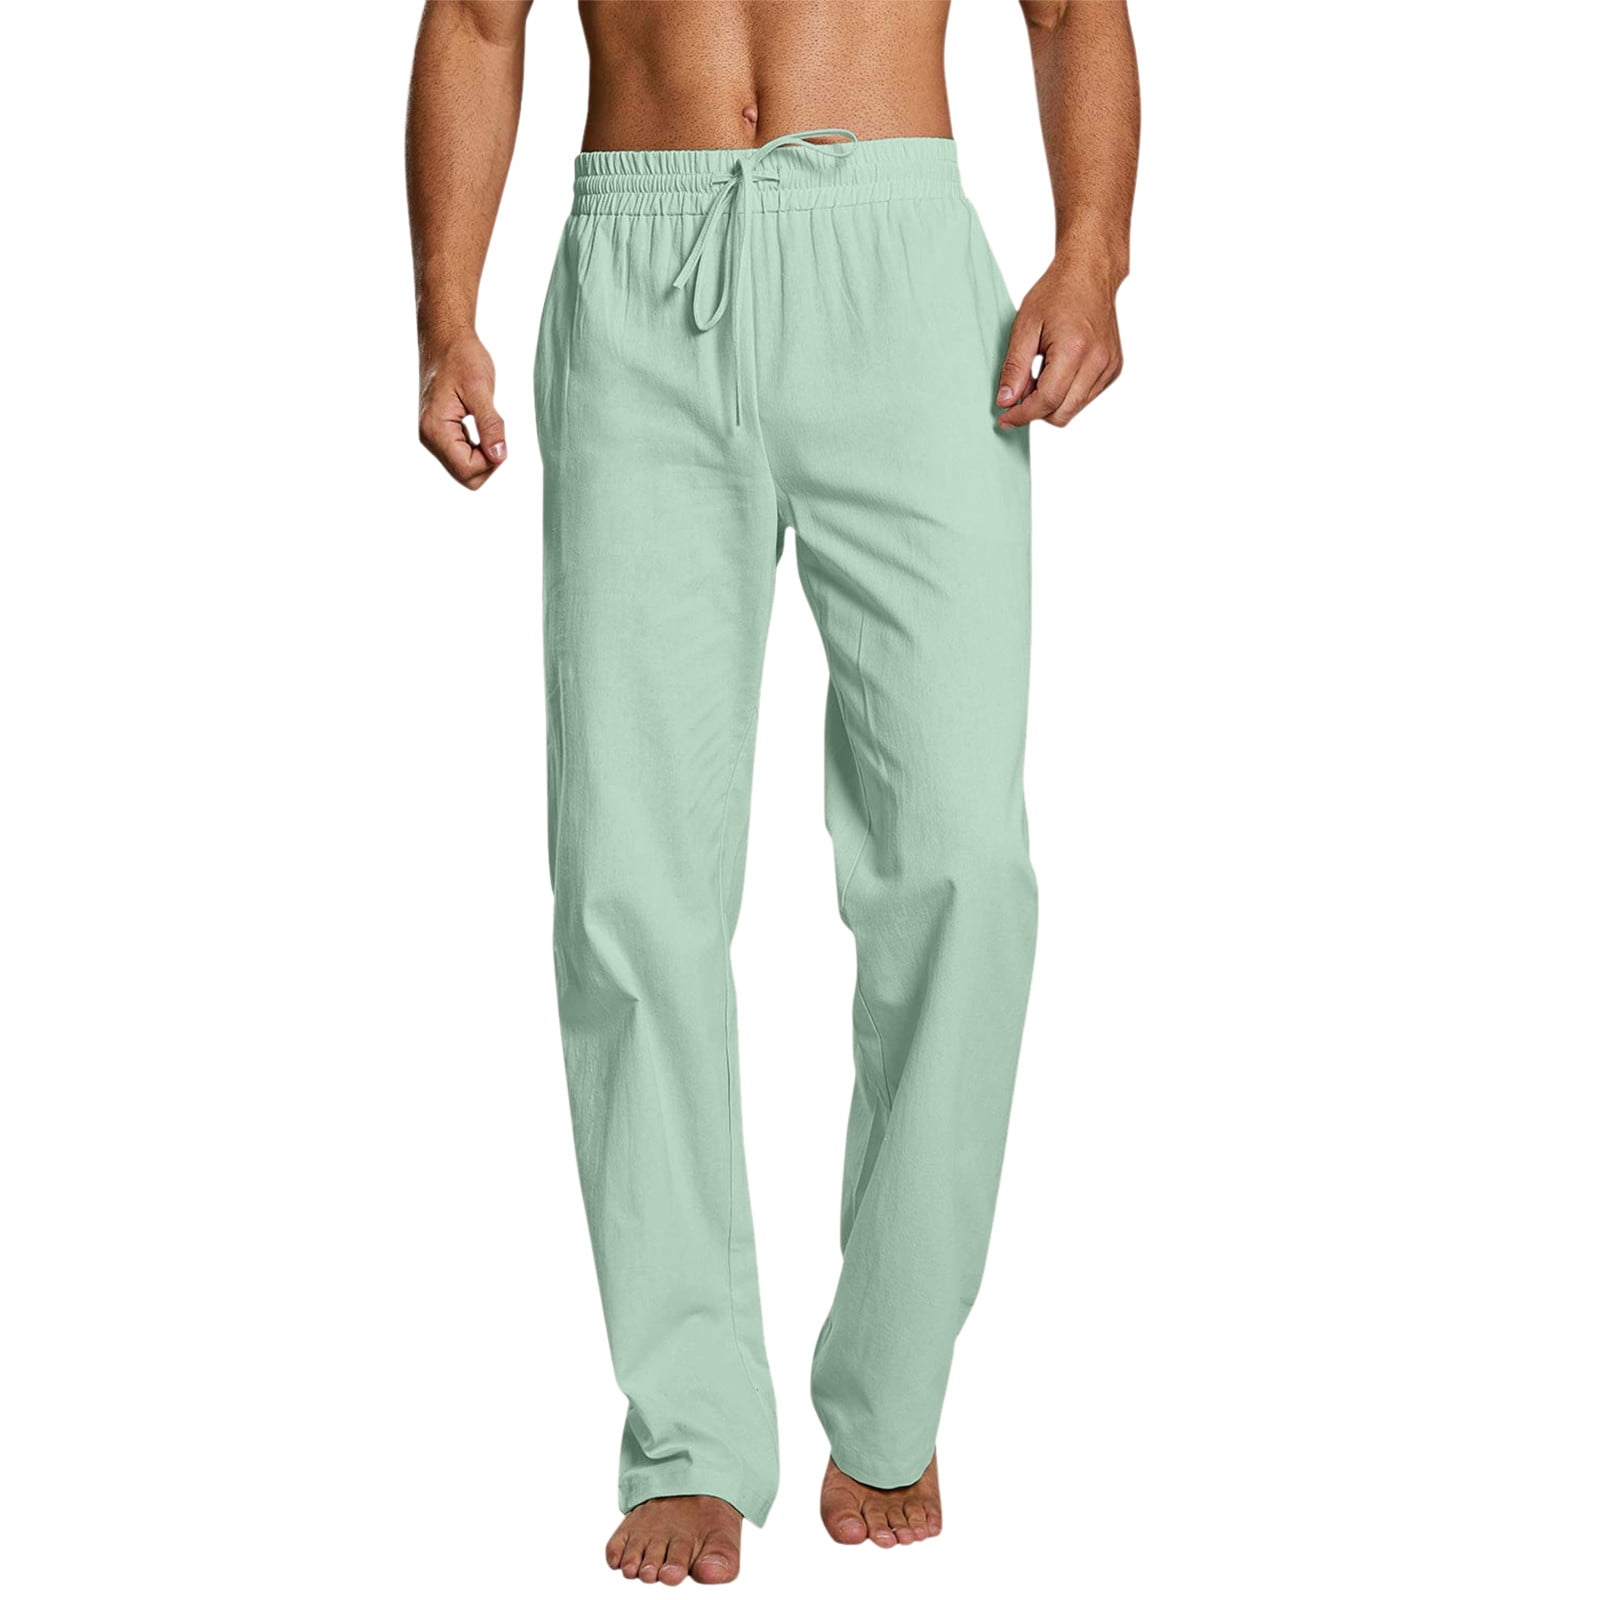 7 Colors Men's Classic Solid Color Summer Thin Casual Pants